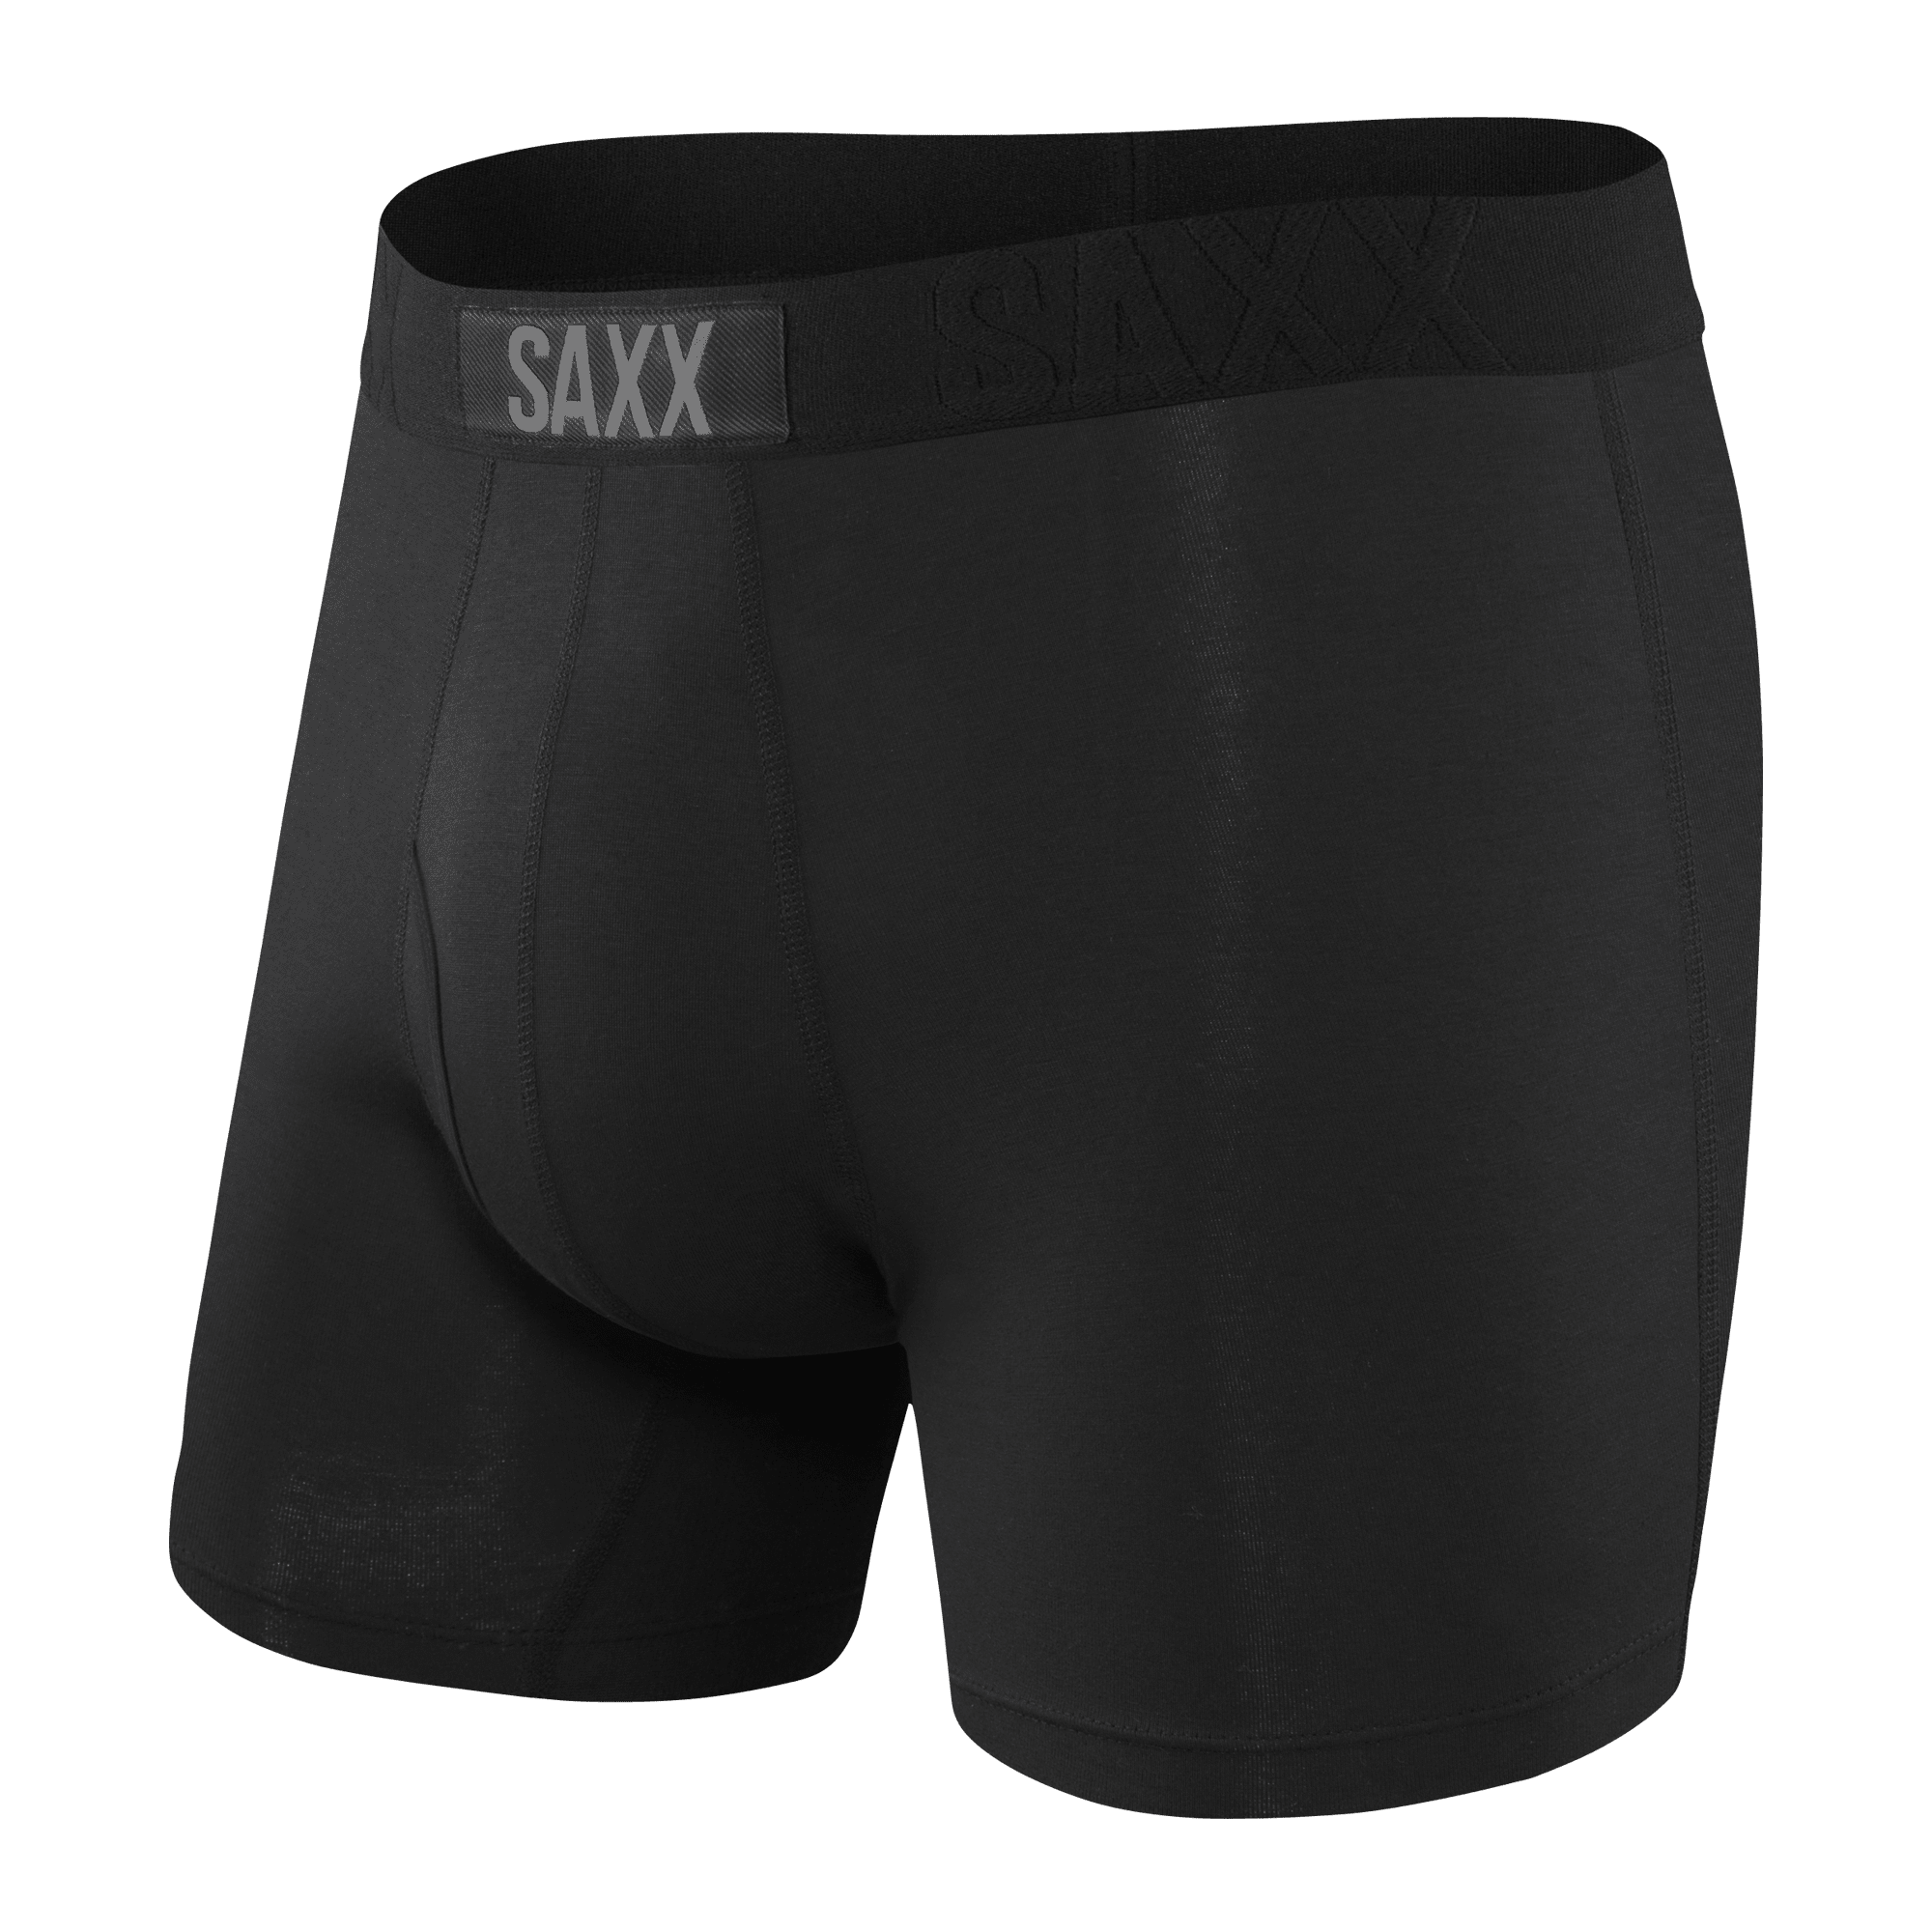 Saxx in Team Sports Equipment & Apparel